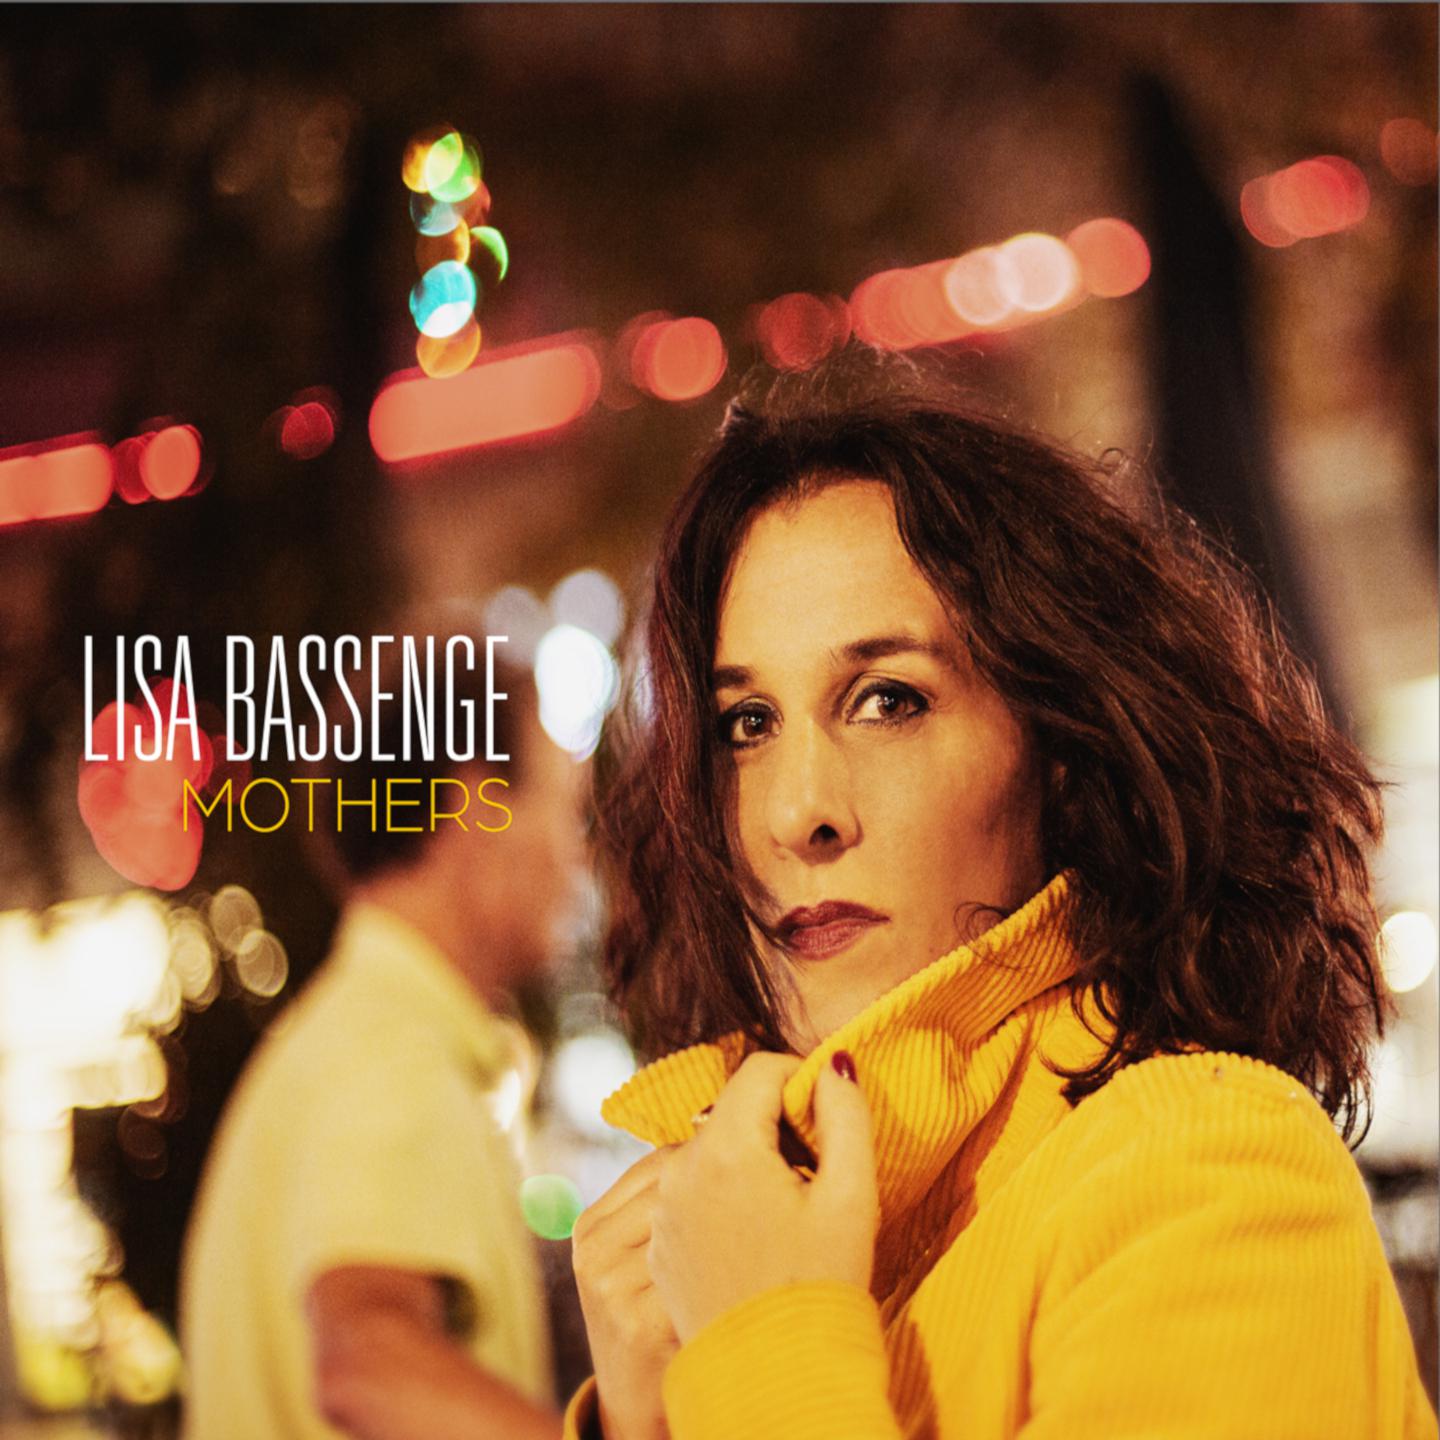 Lisa Bassenge - Don't Come Home A-Drinkin'